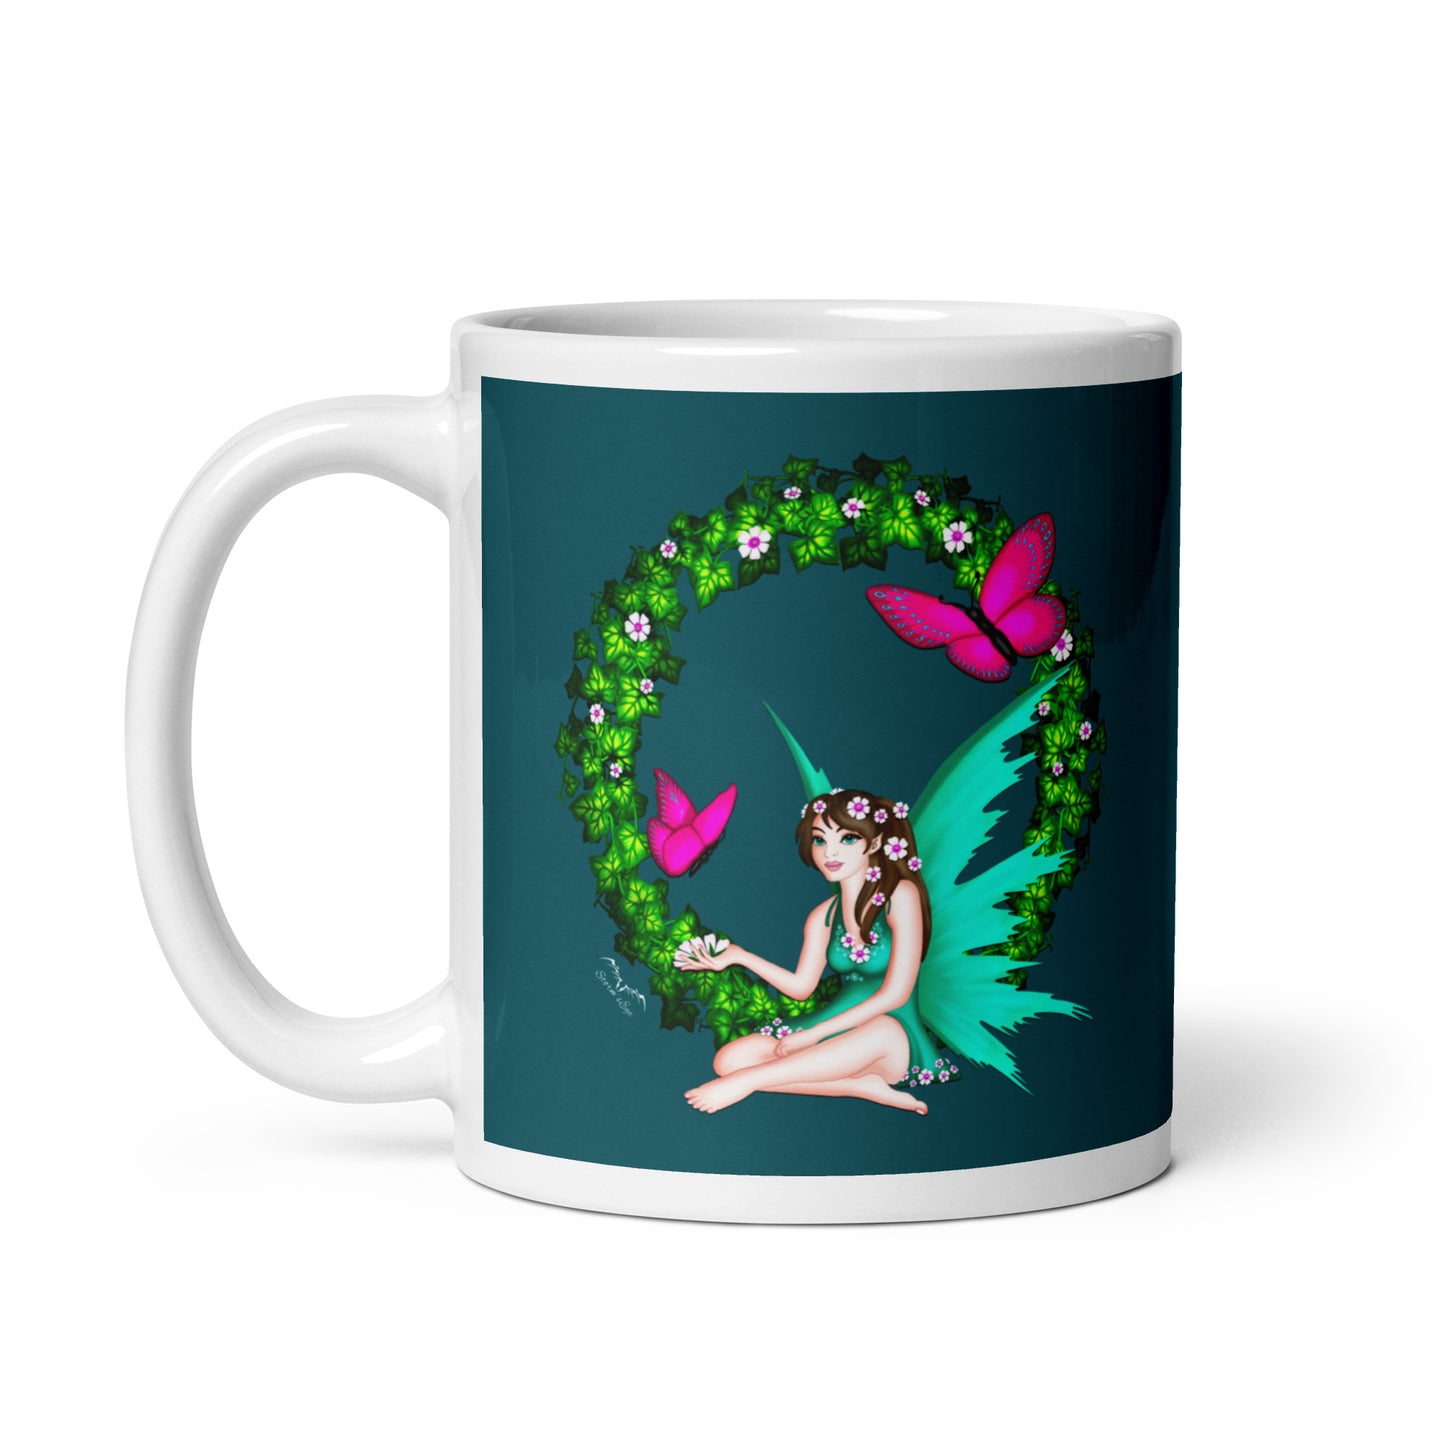 Butterfly Fairy Coffee Mug, Dark Teal, by Stormseye Design